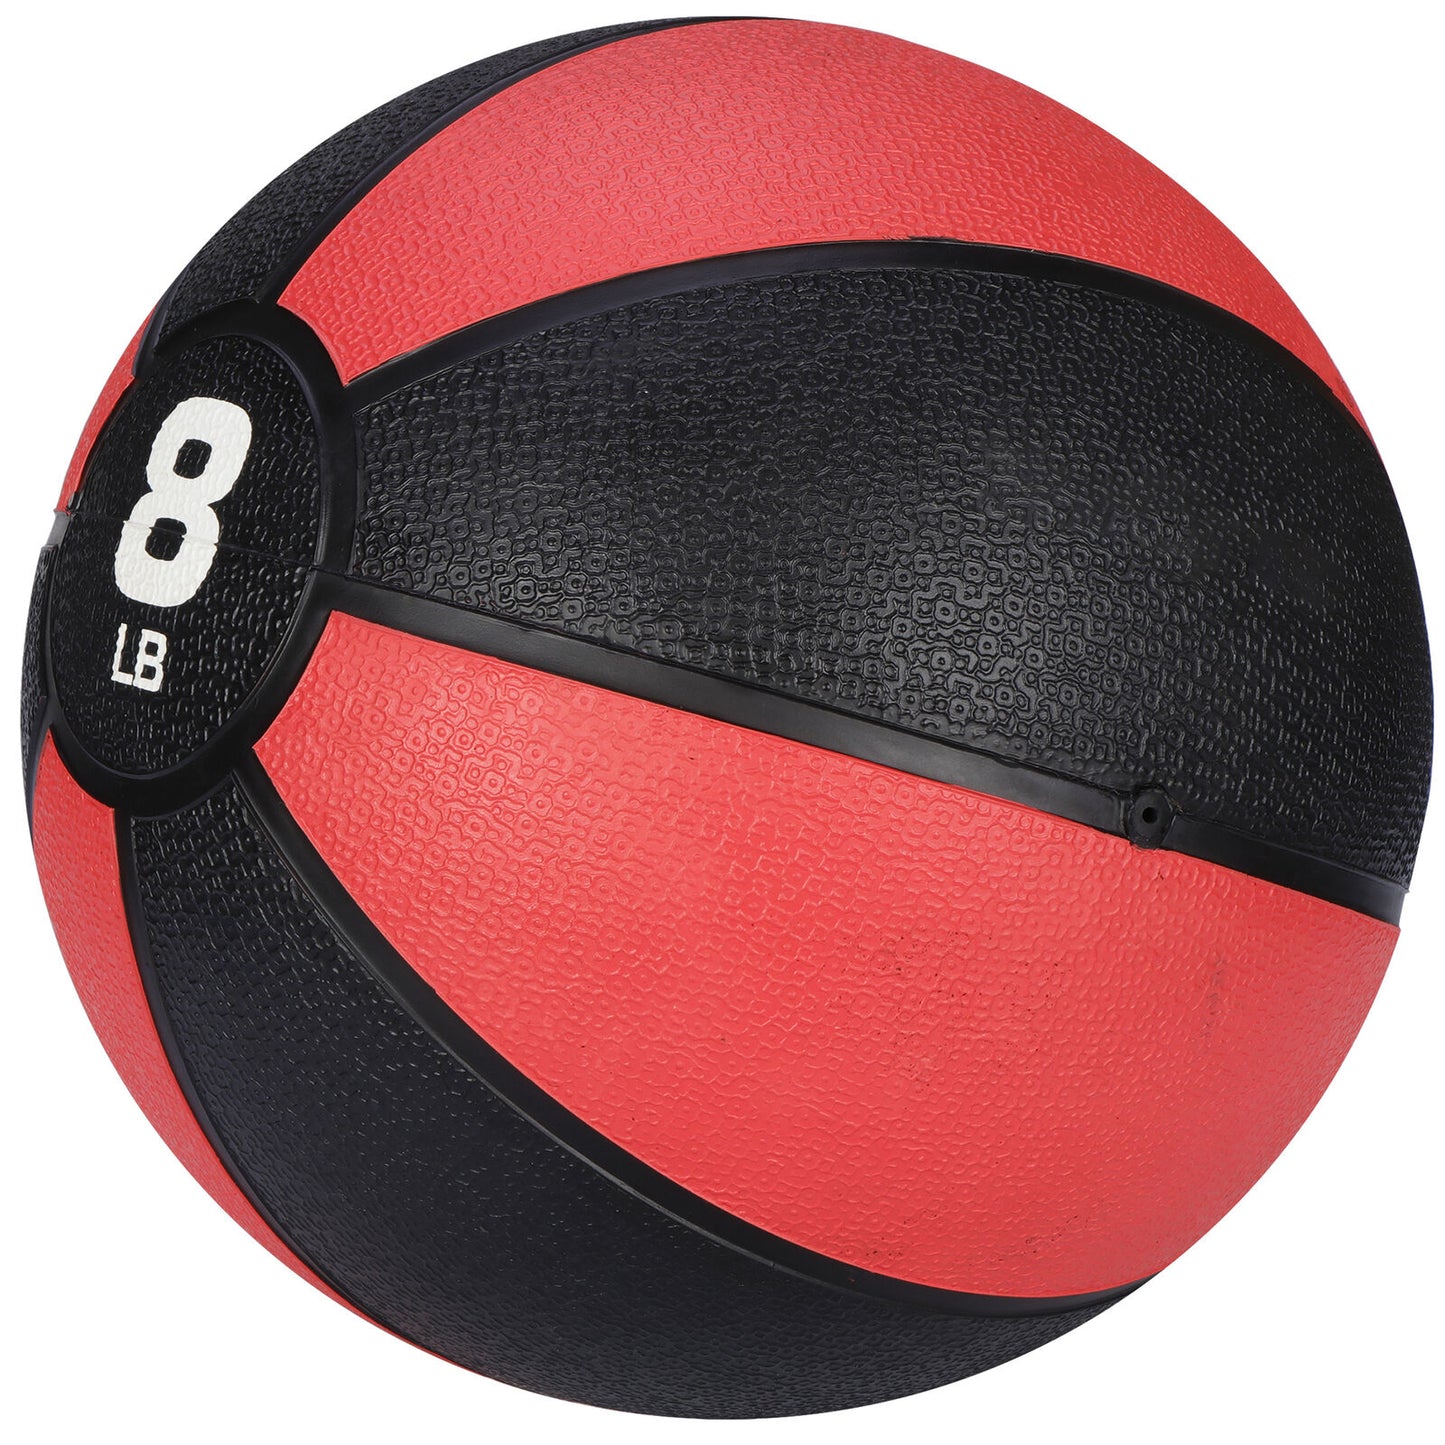 8lb Body Sport Exercise  Medicine Ball for Home Gym Balance Stability Pilates